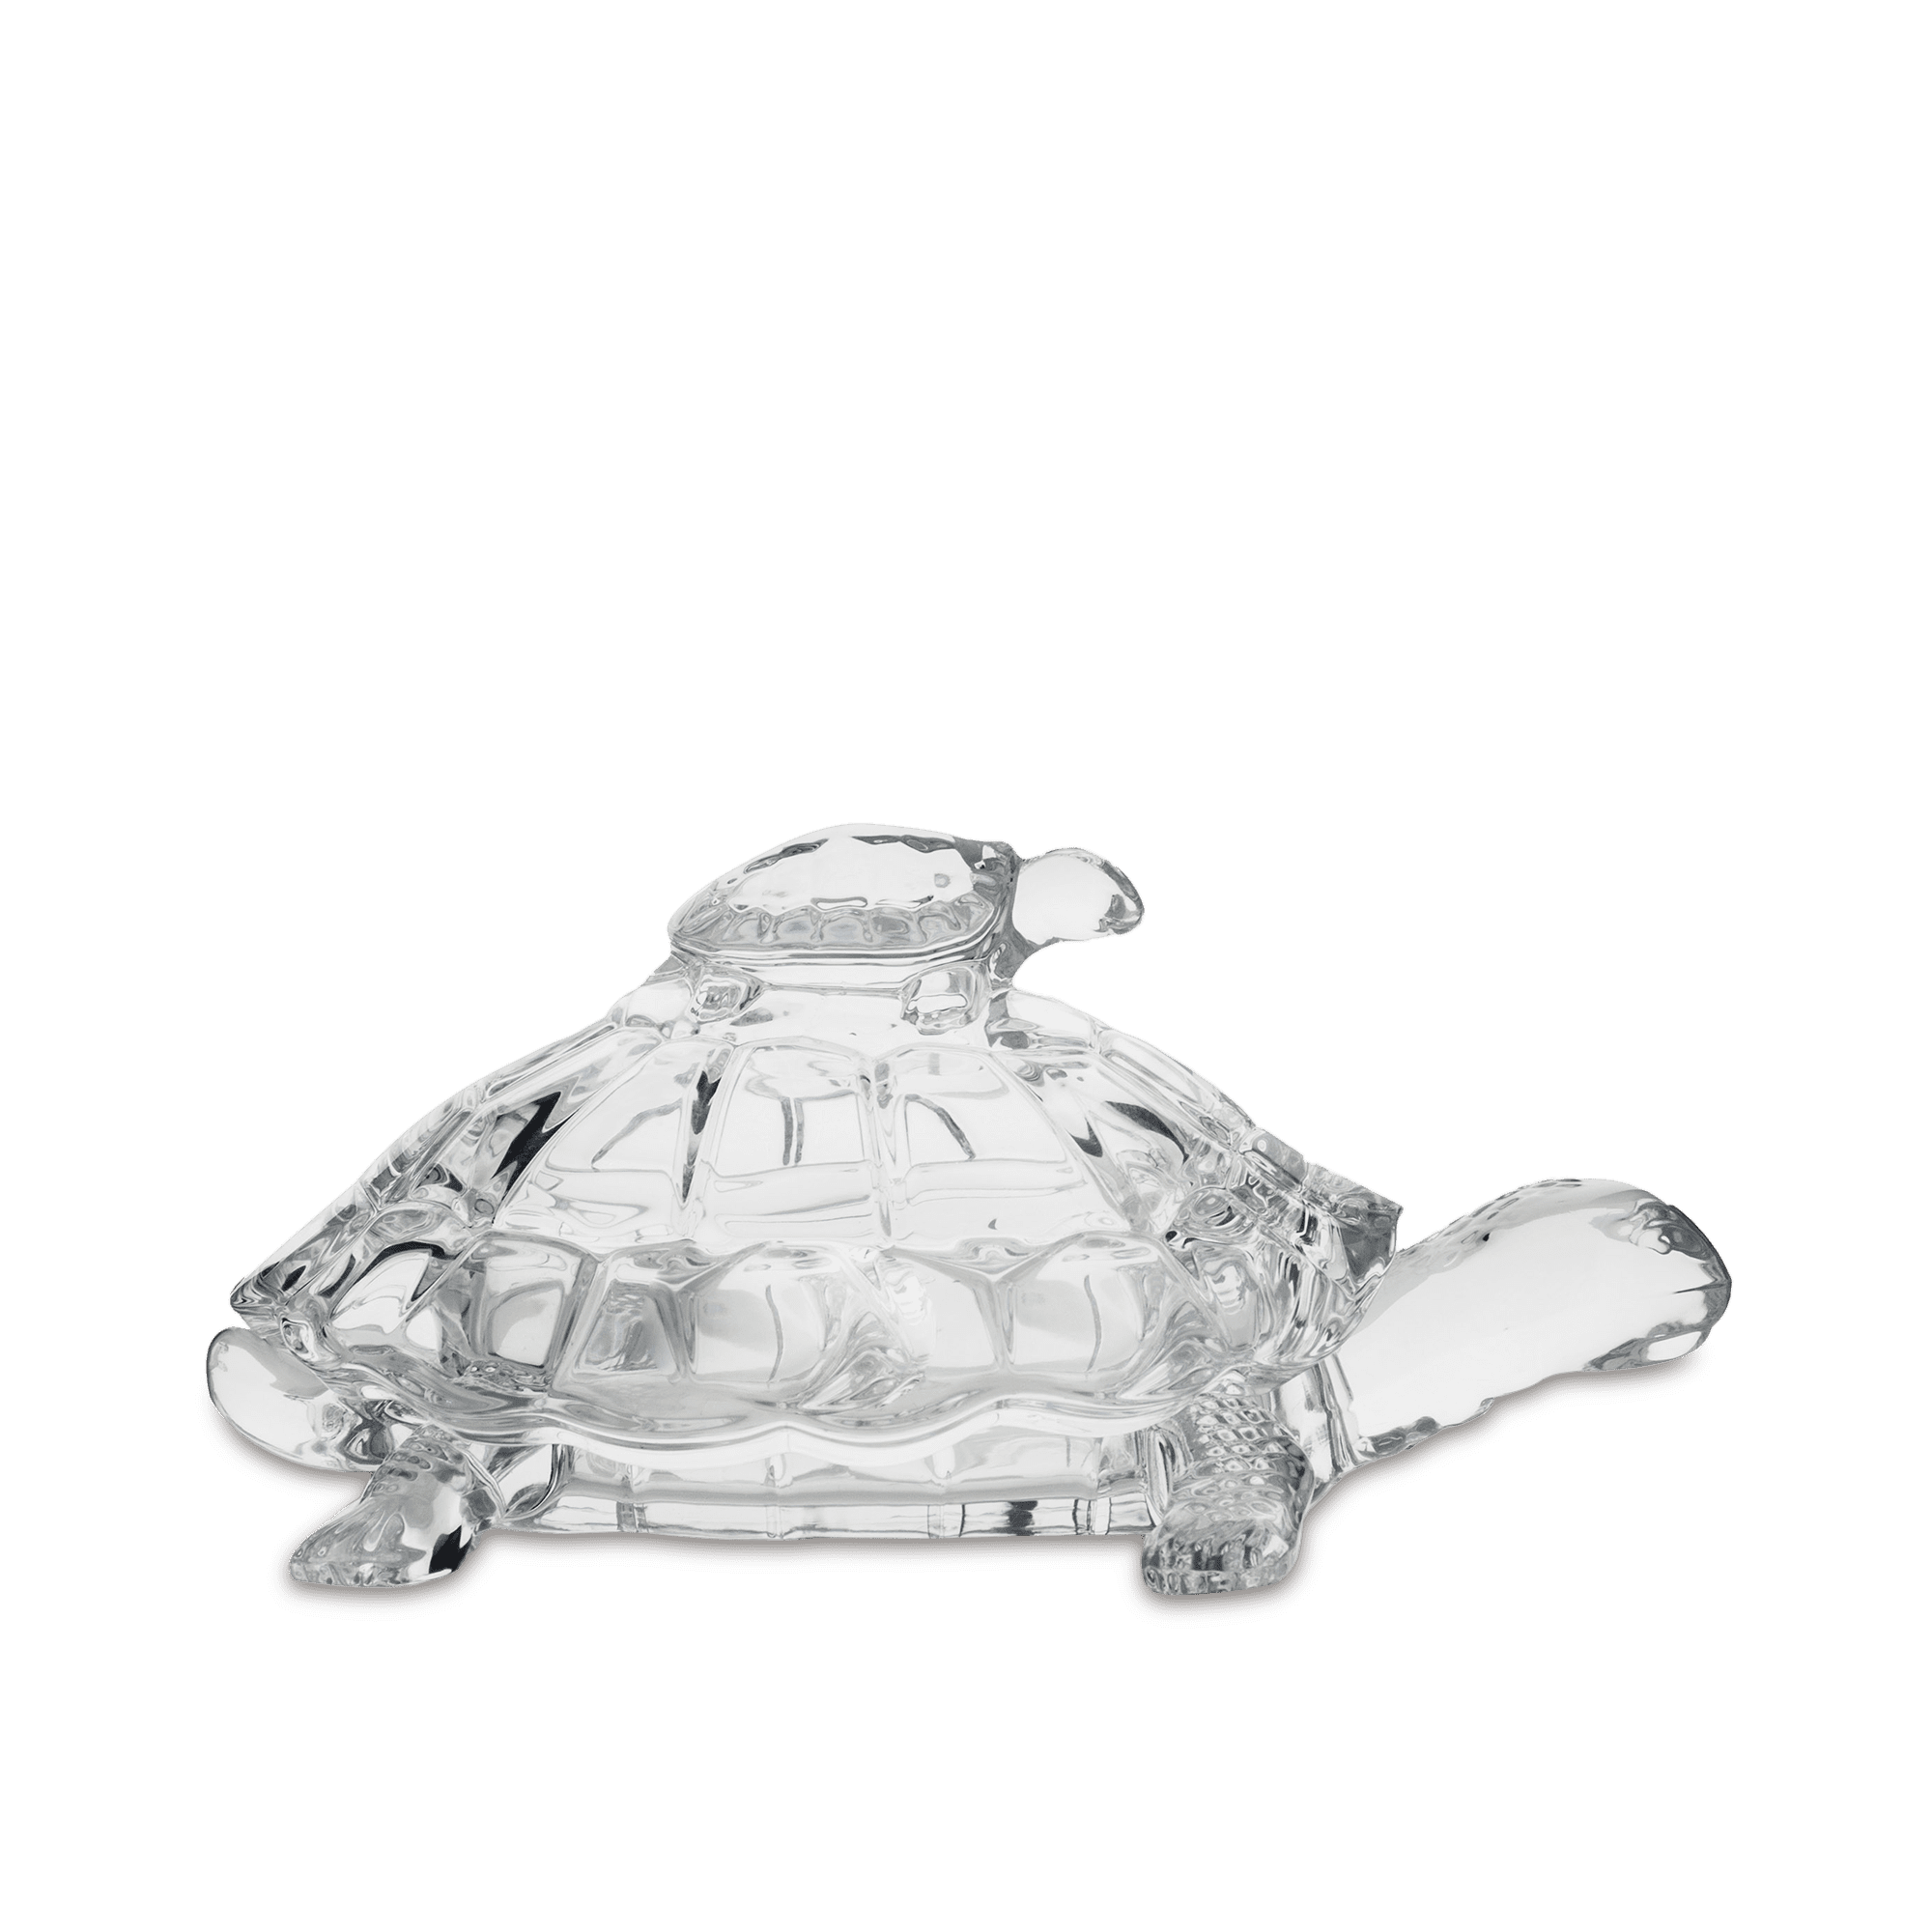 Amruk Turtle Sculpture